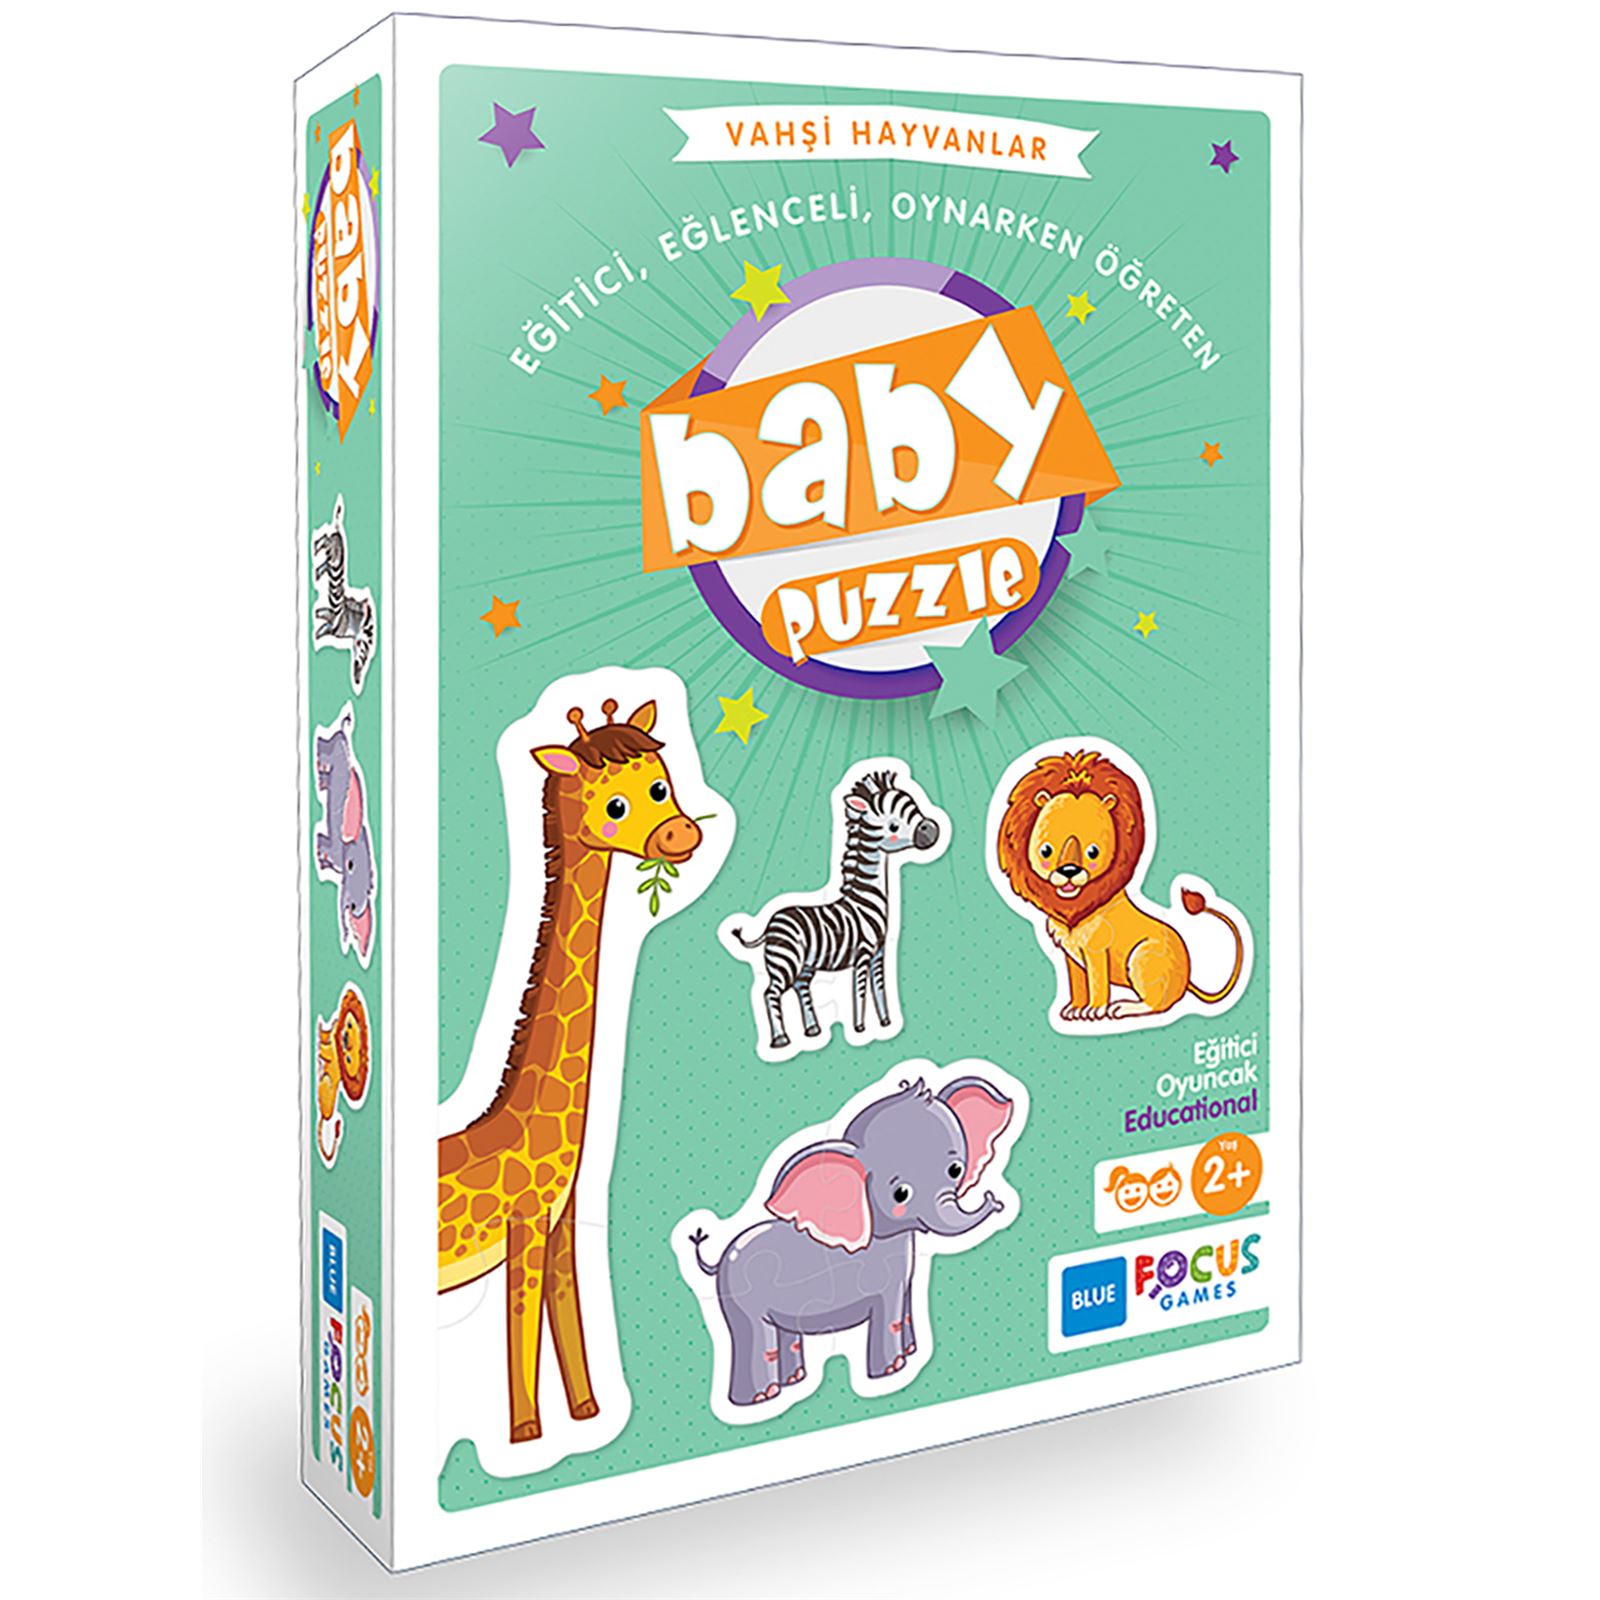 Focus Games Vahşi Hayvanlar Baby Puzzle Renkli